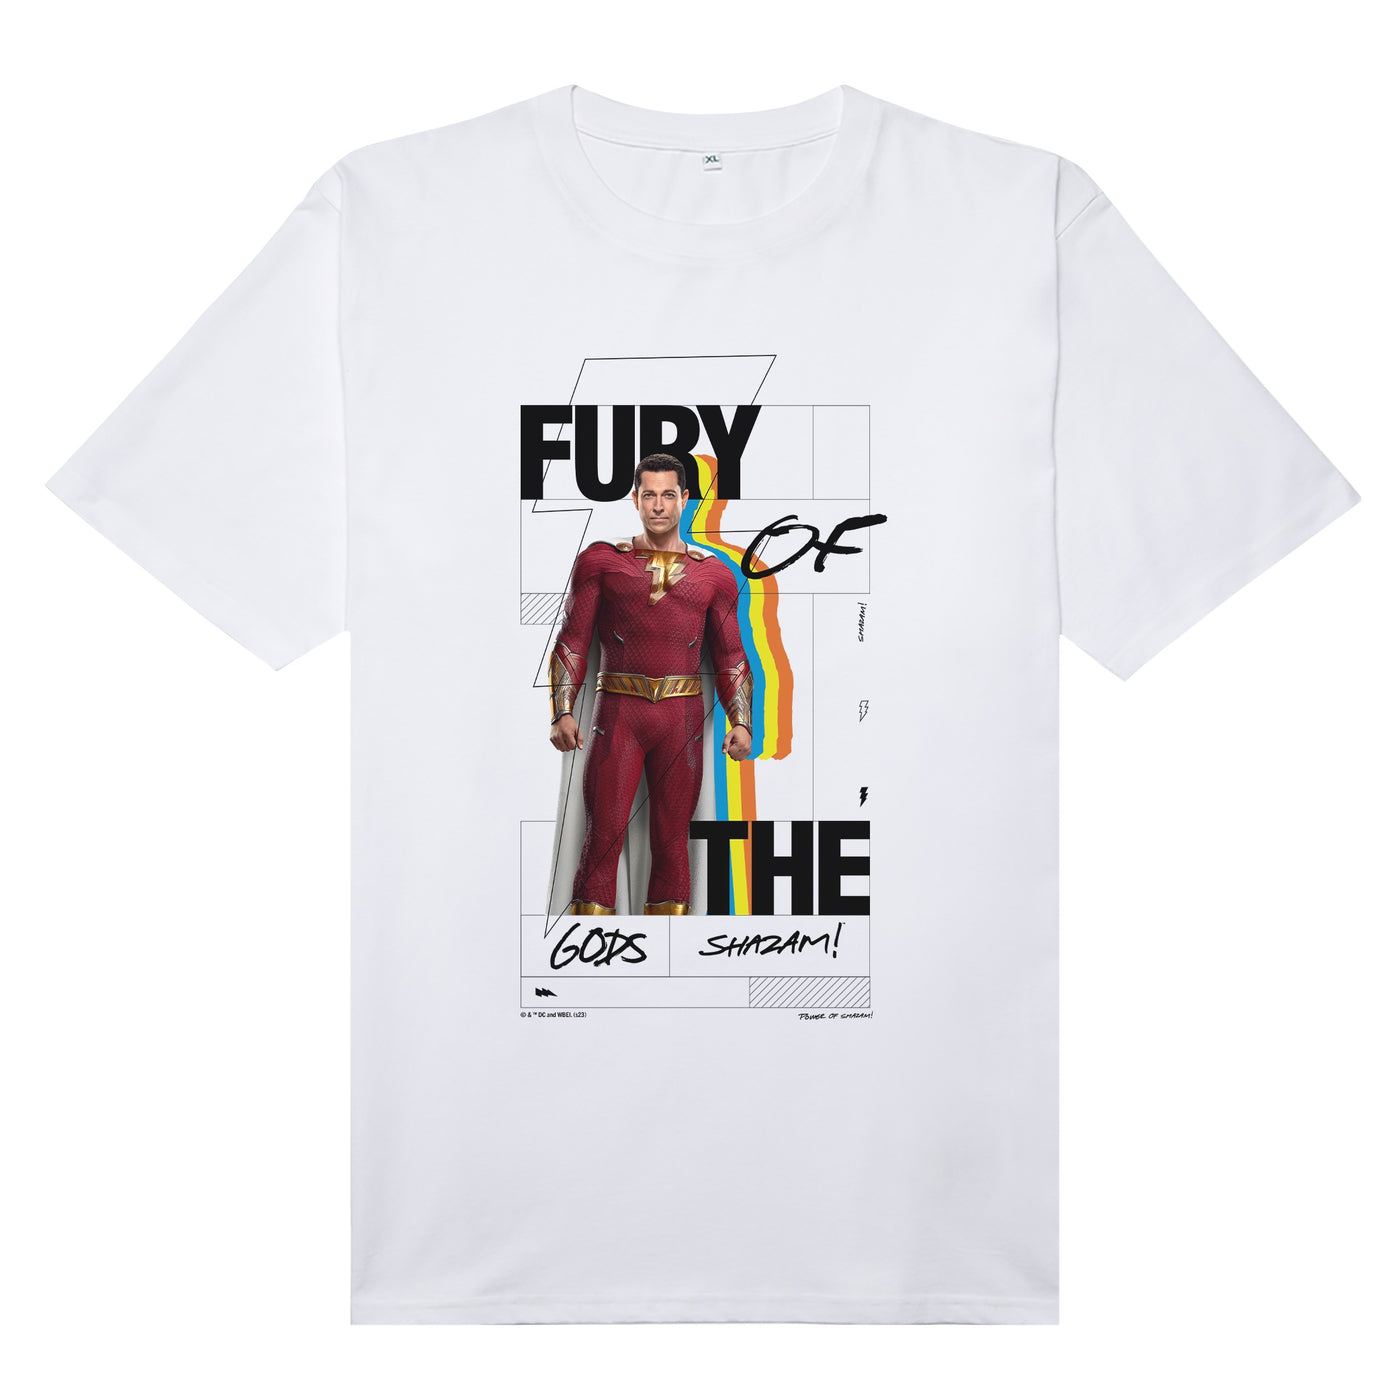 Shazam! Fury of the Gods Men's Short Sleeve T-Shirt